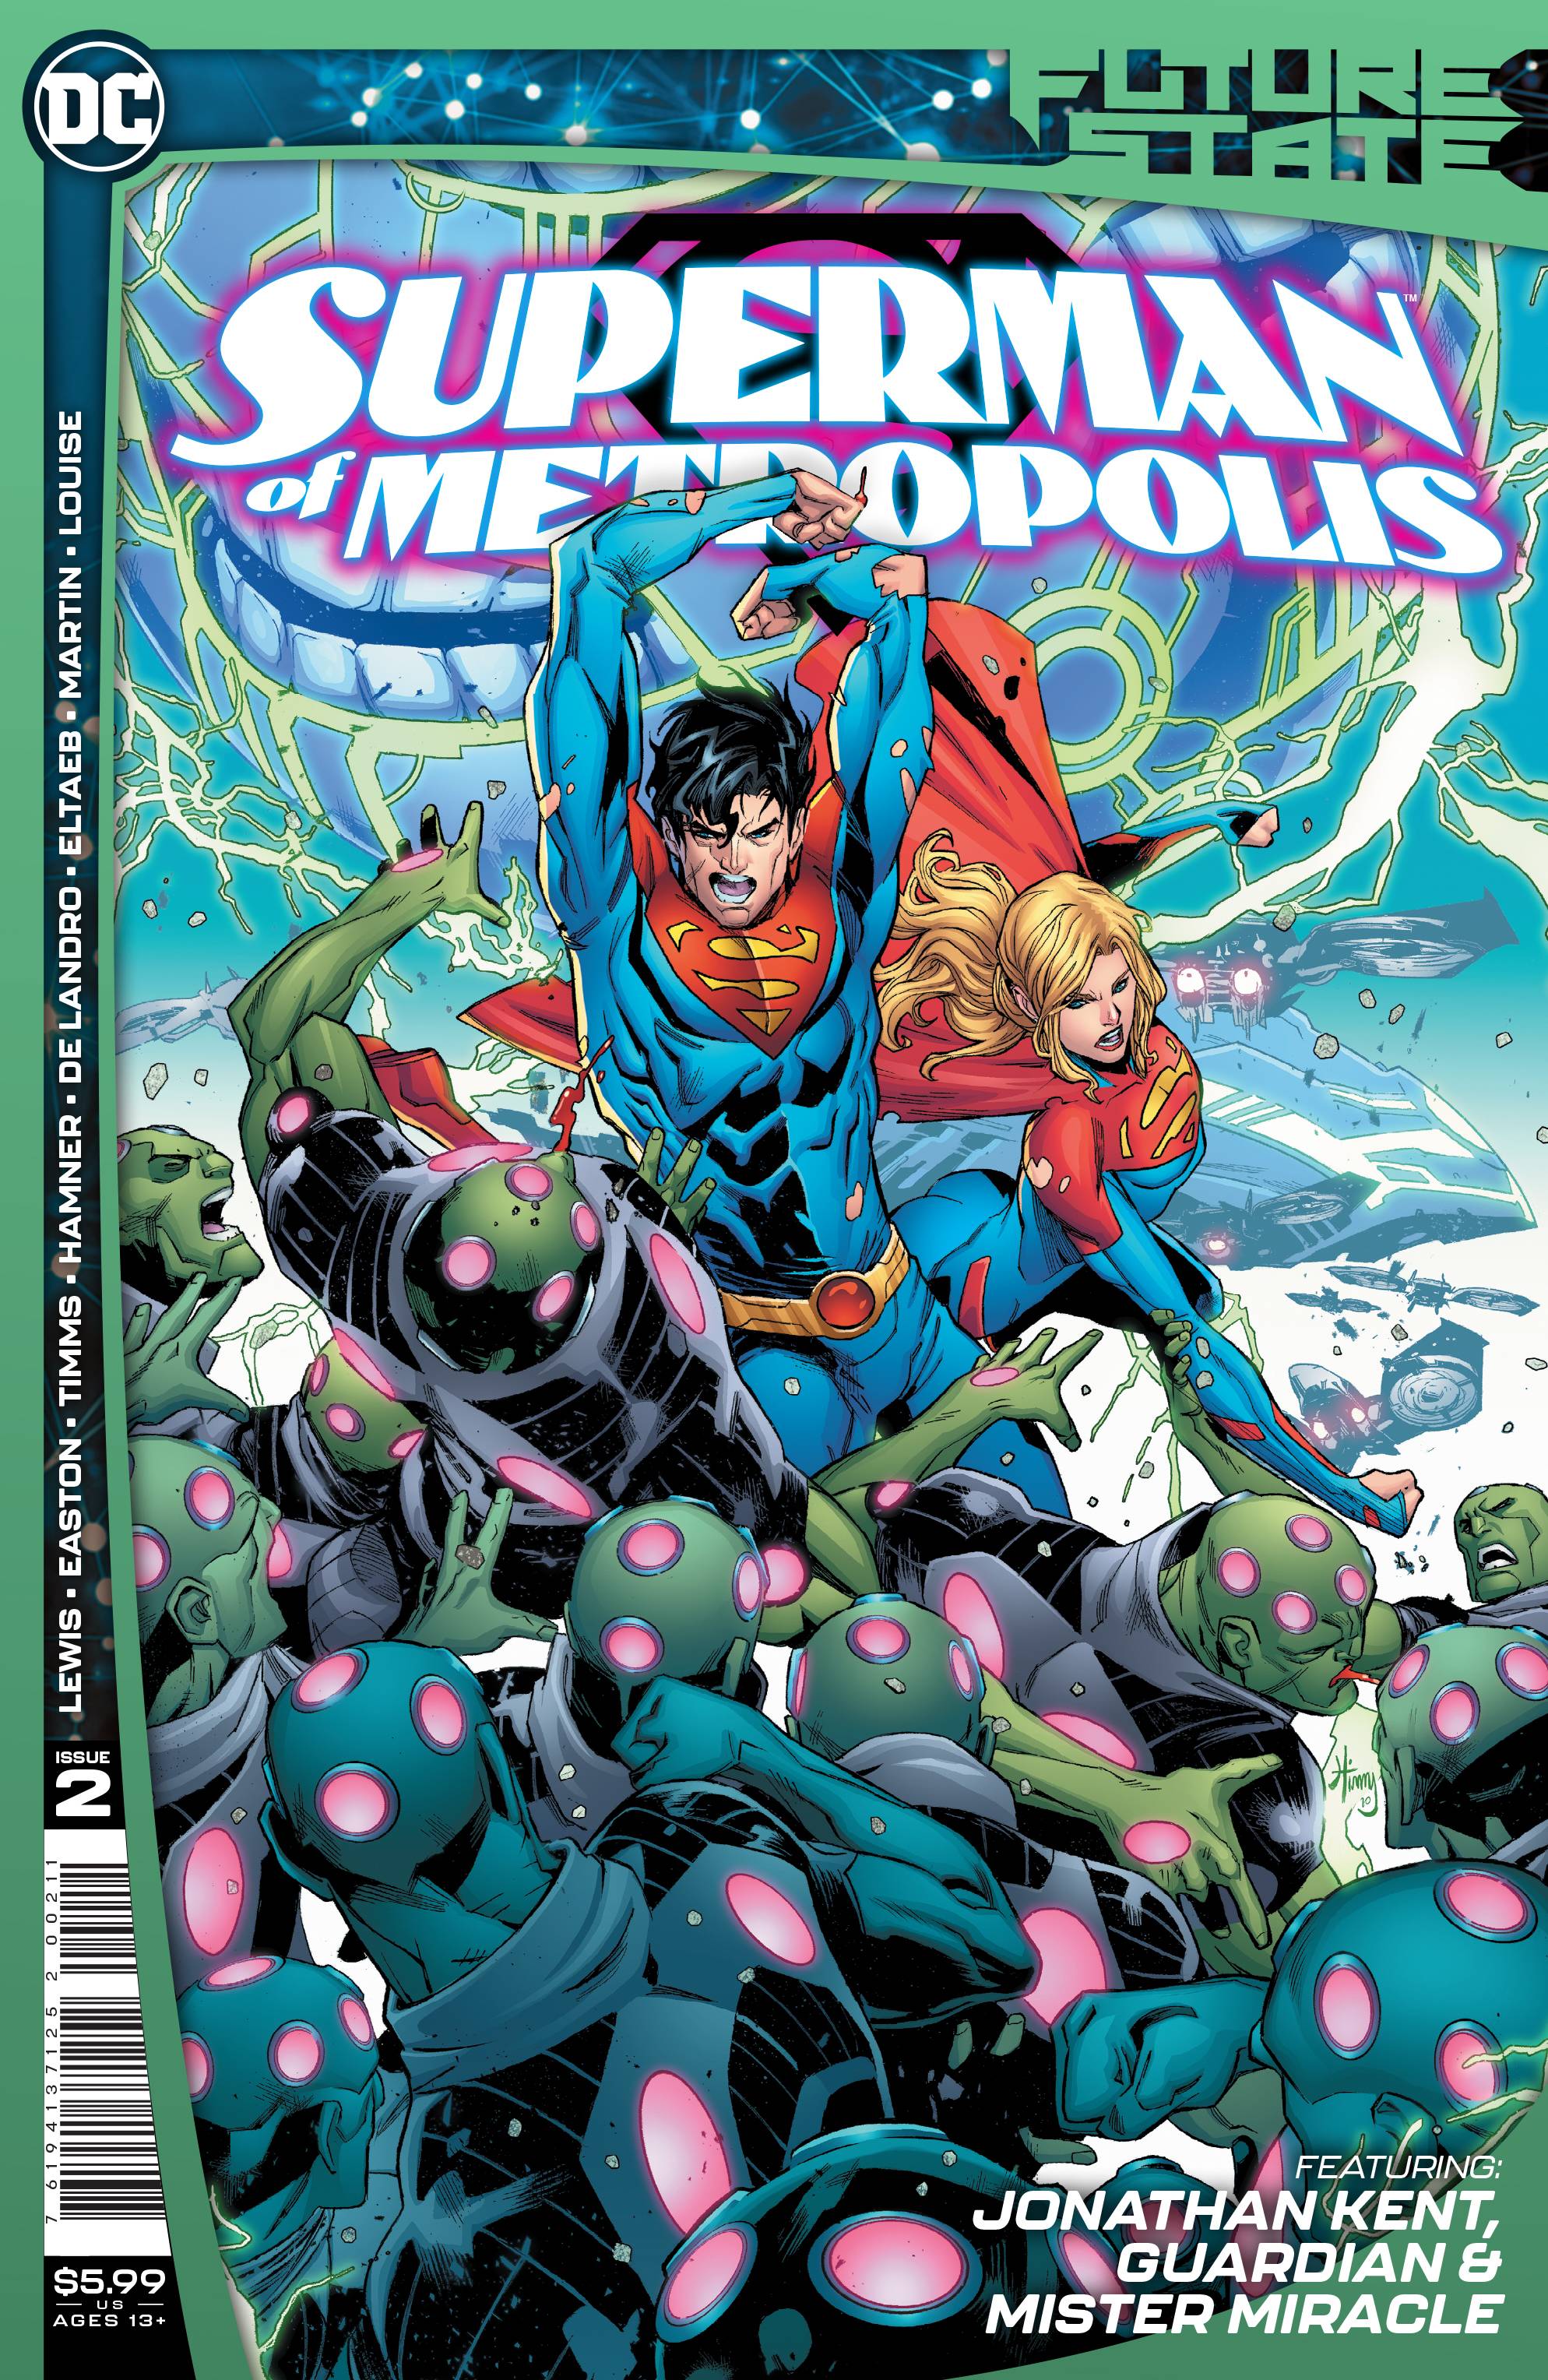 FUTURE STATE SUPERMAN OF METROPOLIS #2 | Game Master's Emporium (The New GME)